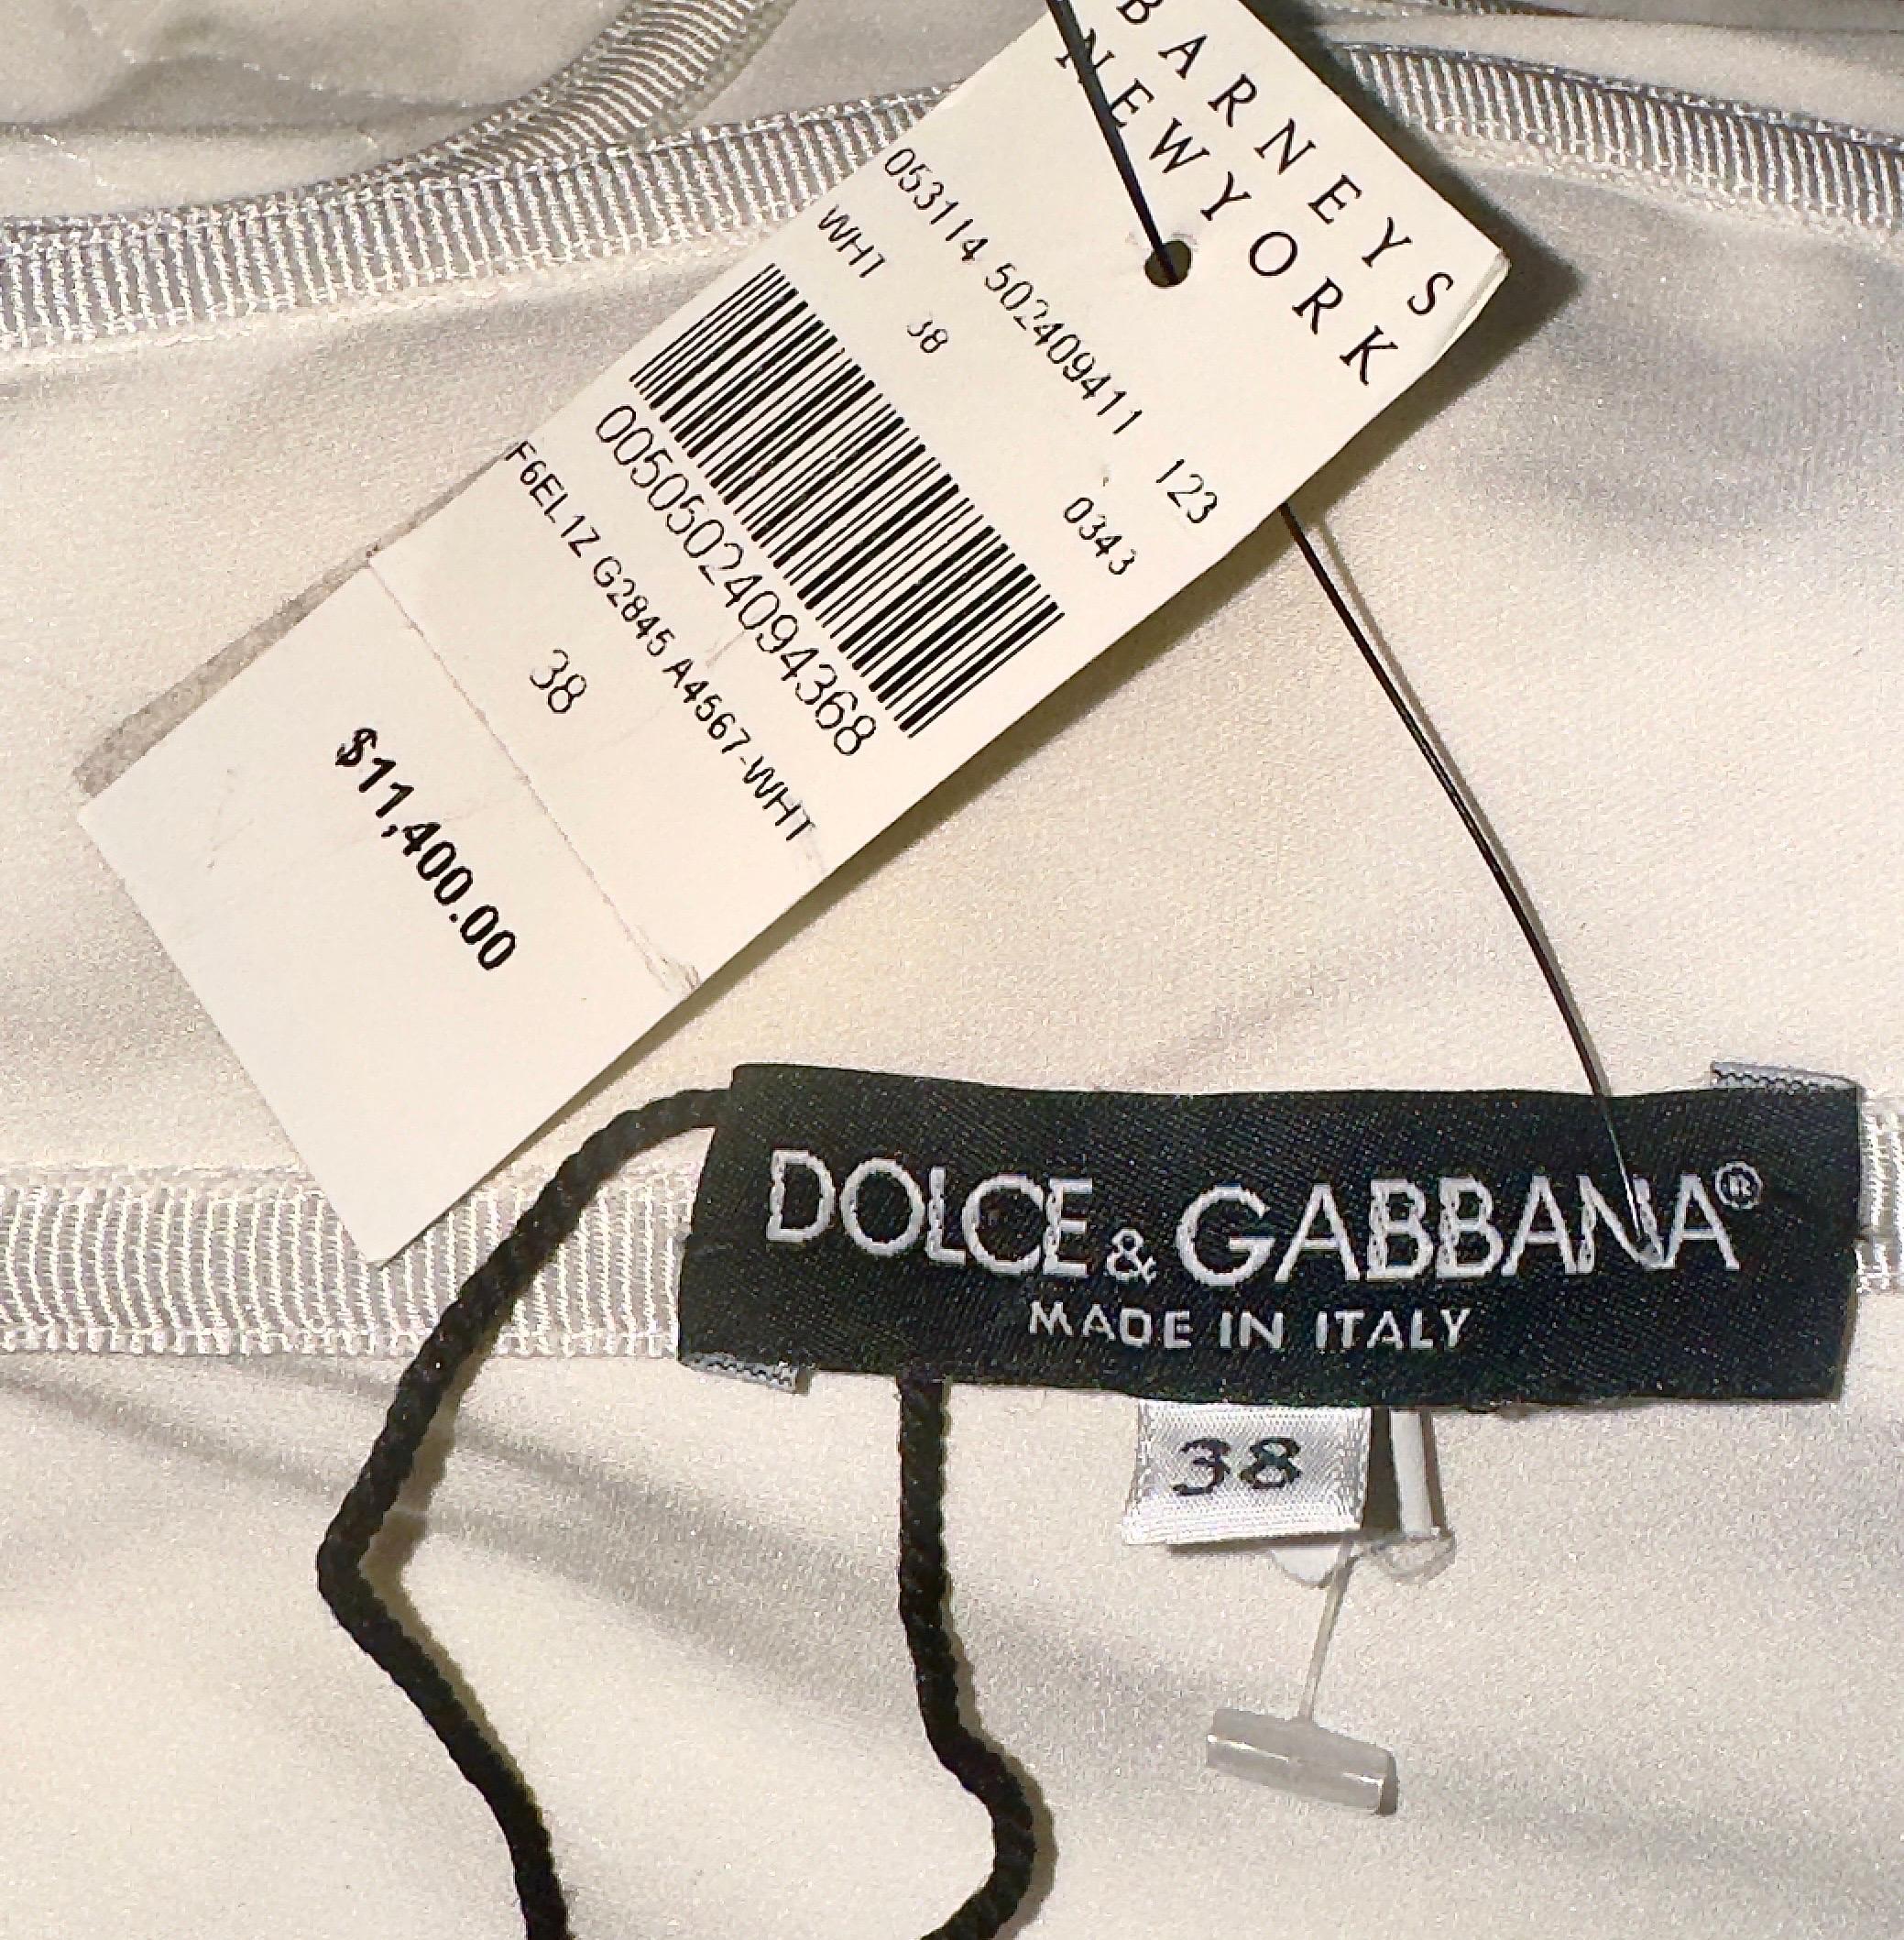 DOLCE & GABBANA Strapless Corset Bustier Lace Engagement Bridal Dress 38 For Sale 4